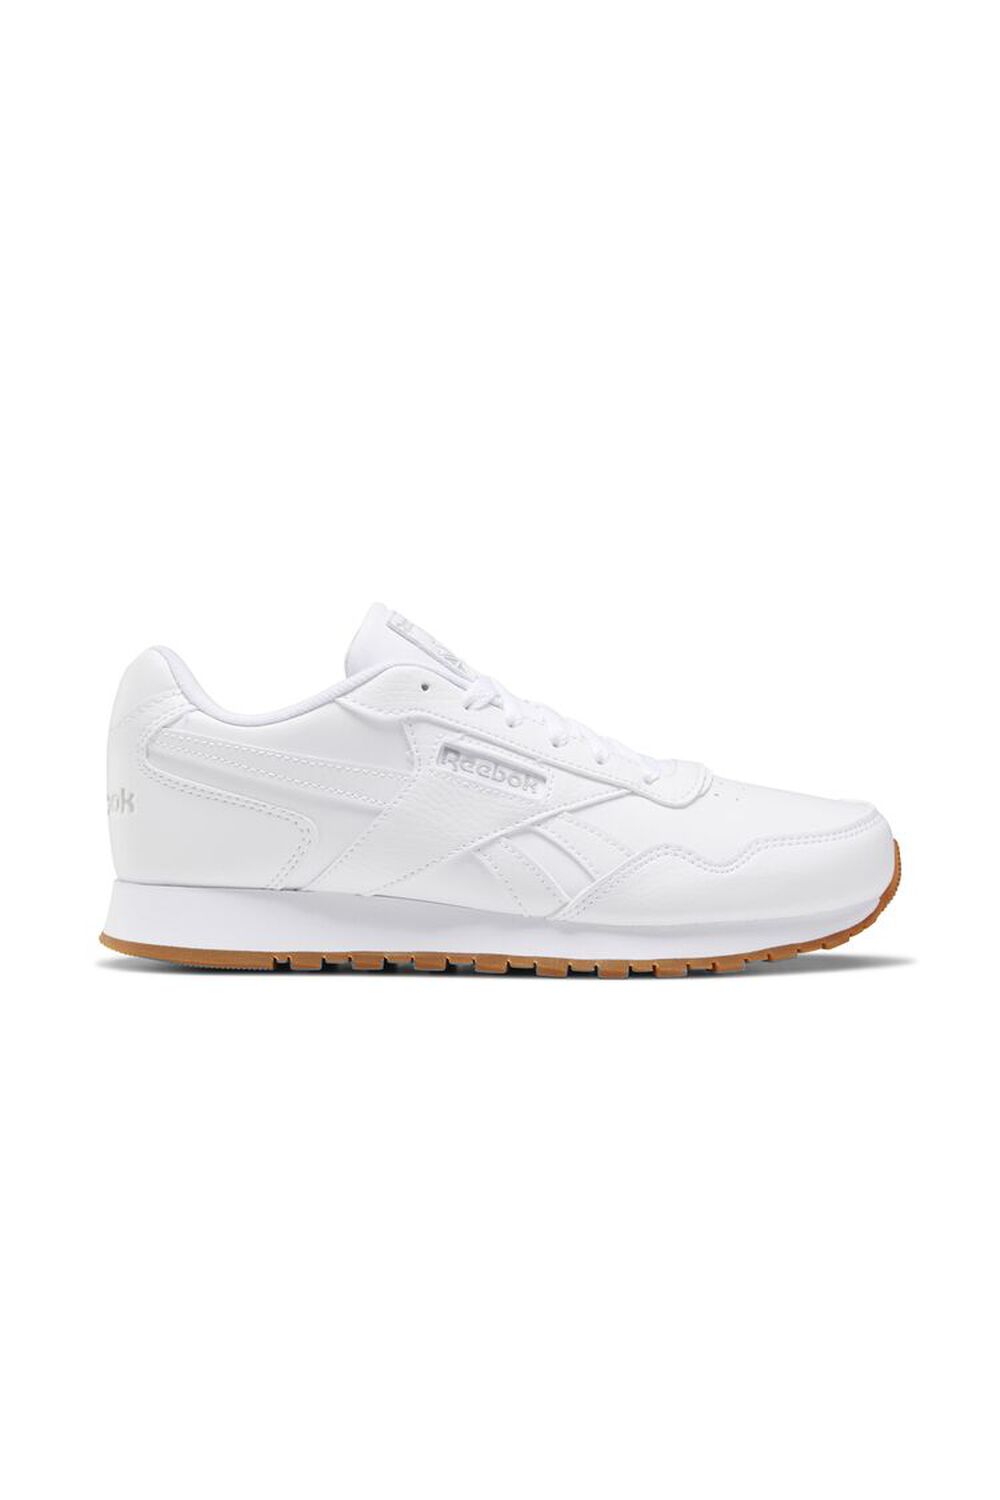 WHITE Reebok Classic Harman Run S Shoes, image 2